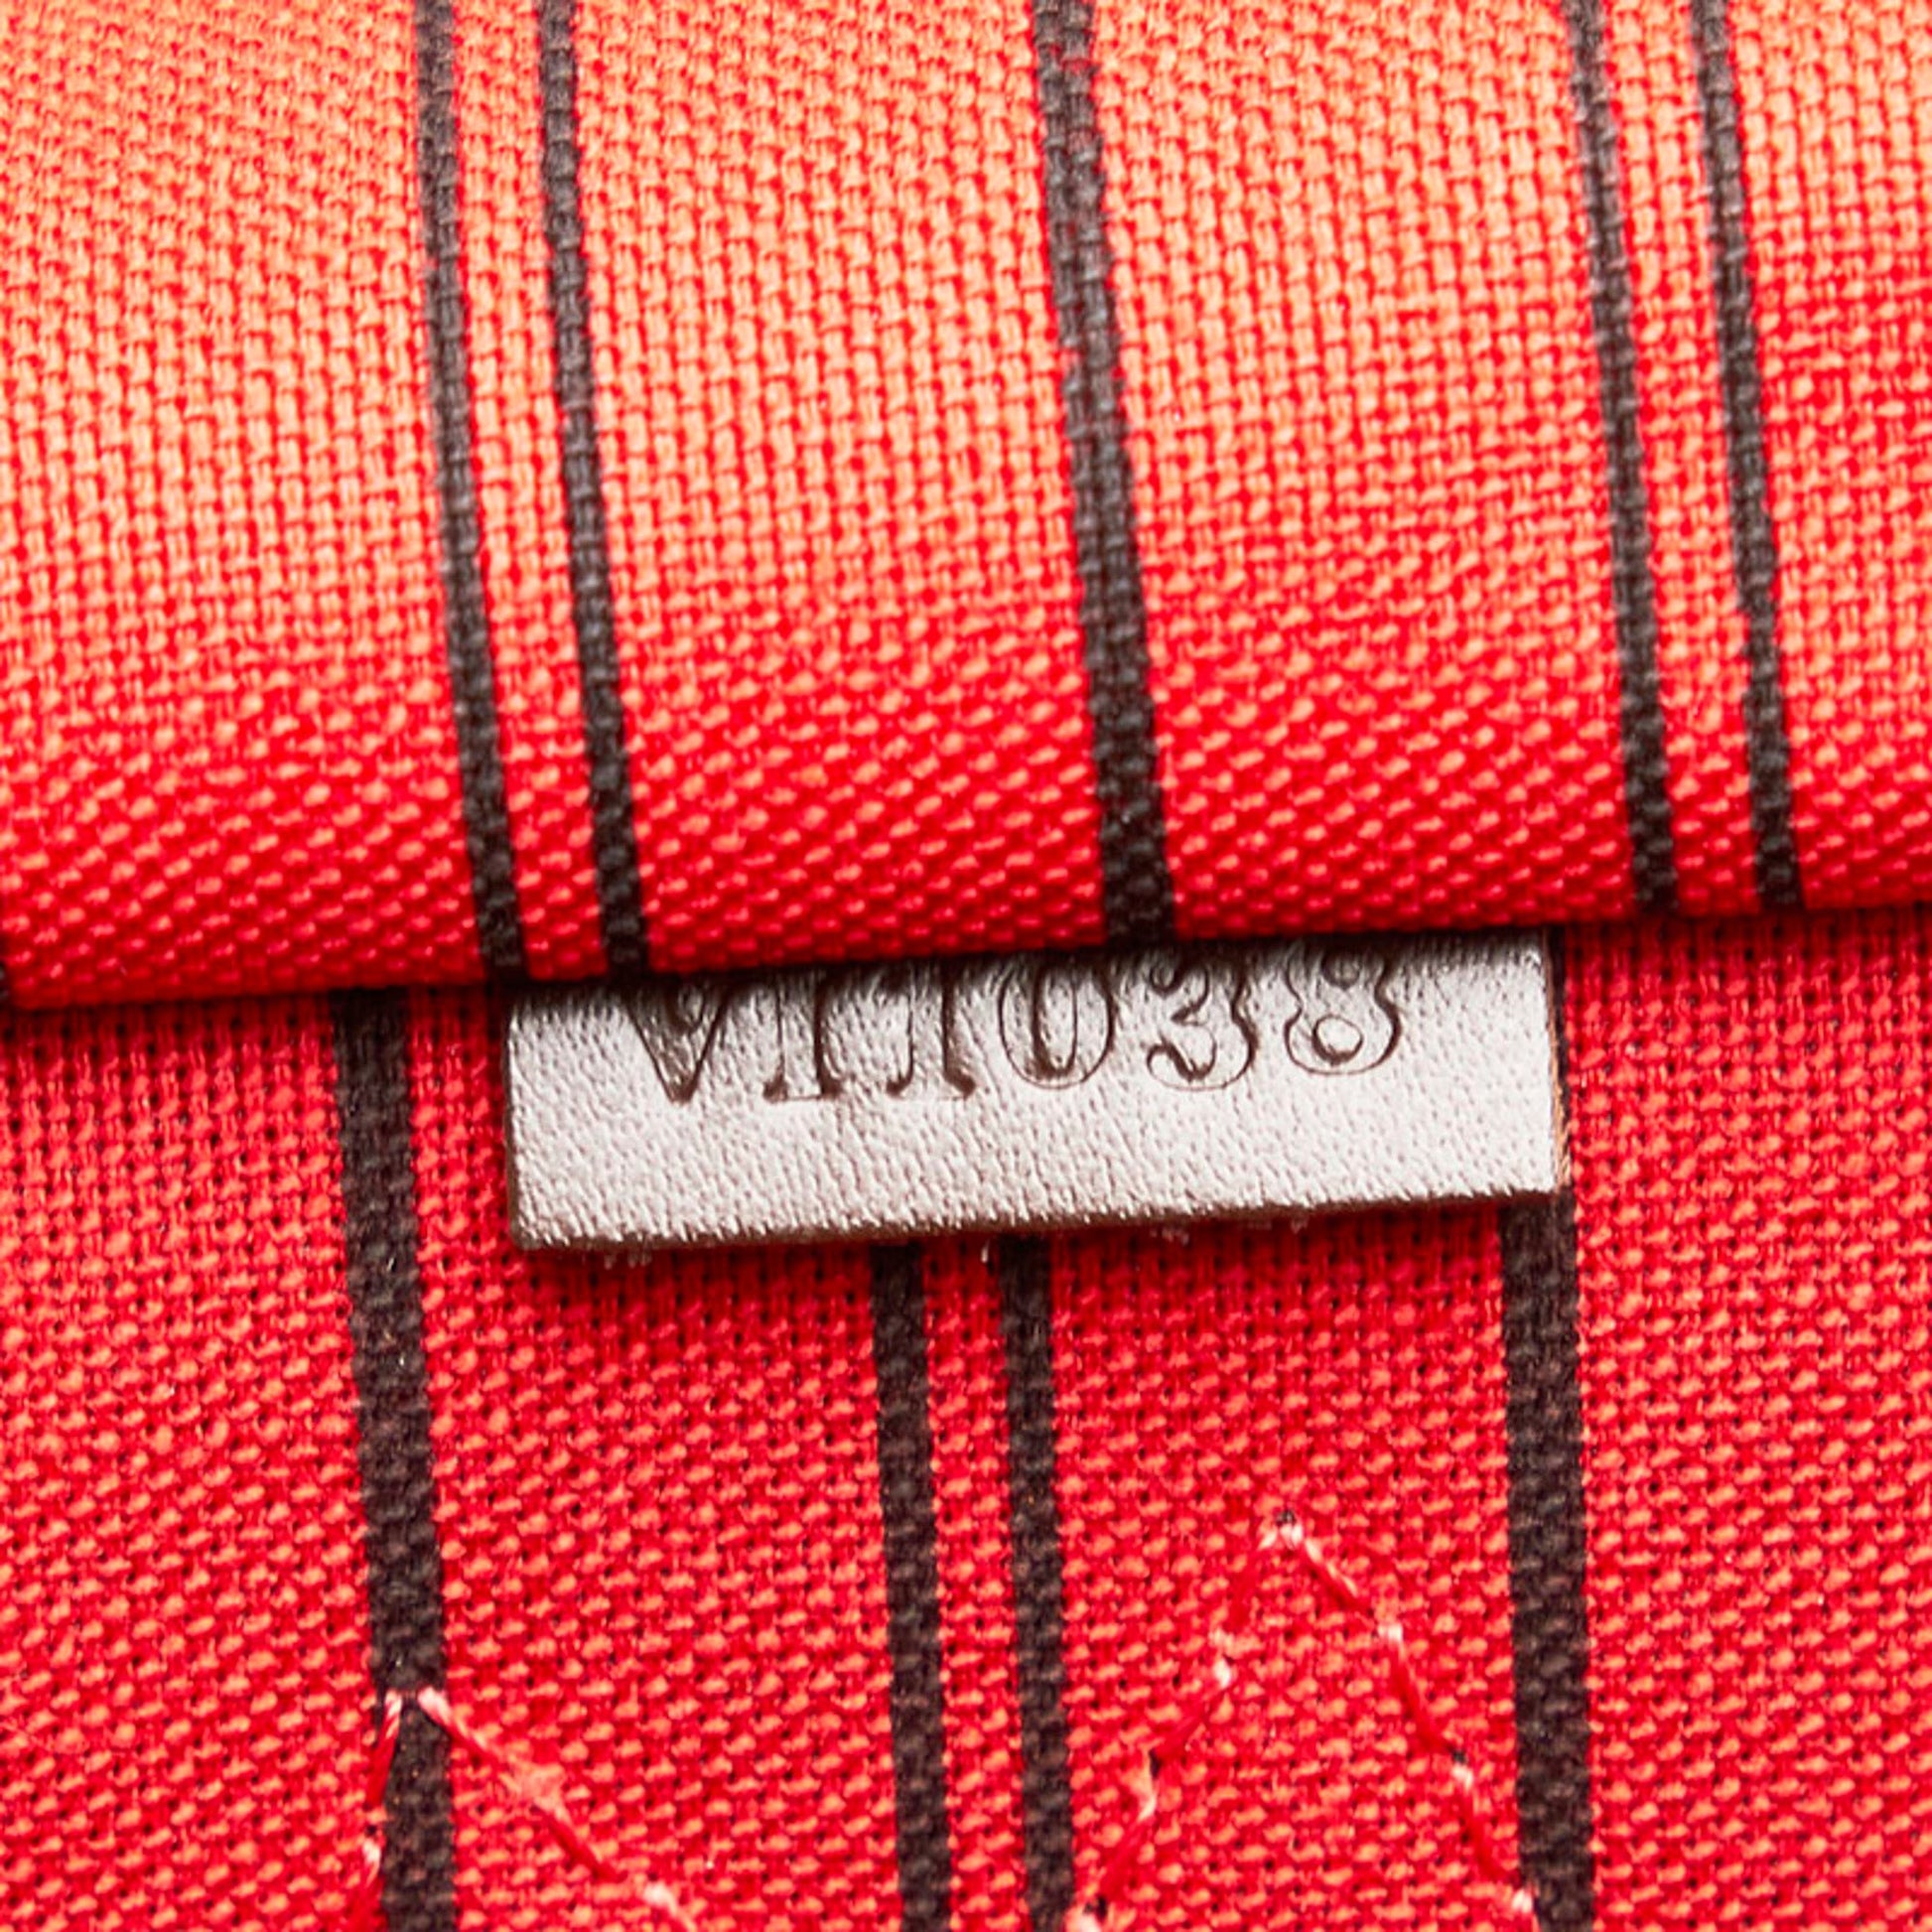 Shop Louis Vuitton NEVERFULL Neverfull pm (N41359) by Bellaris